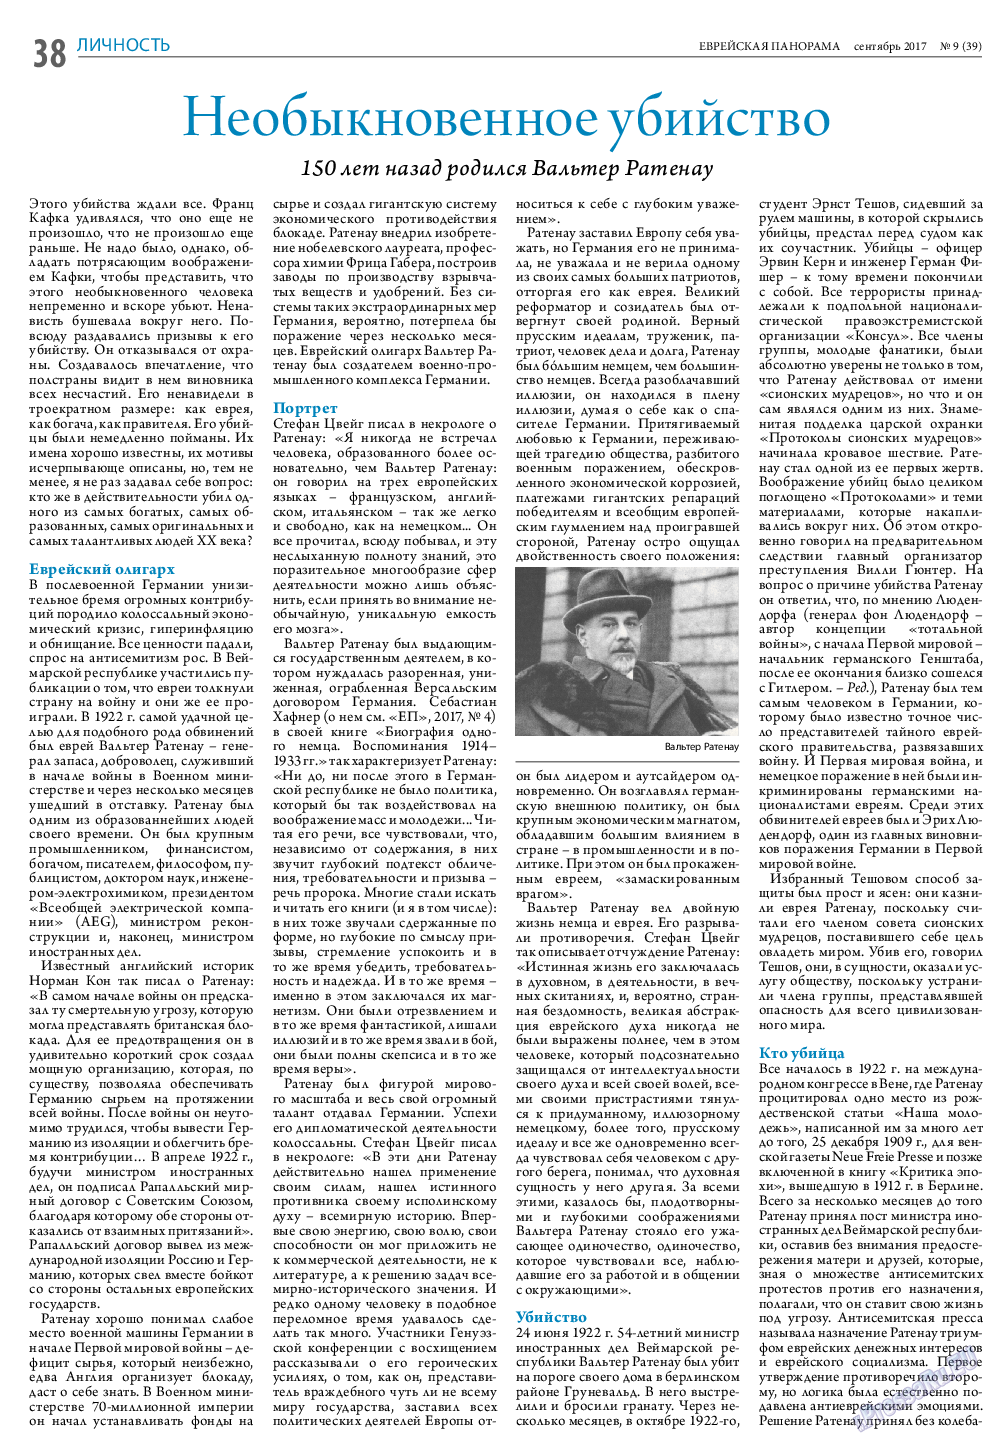 Еврейская панорама, газета. 2017 №9 стр.38